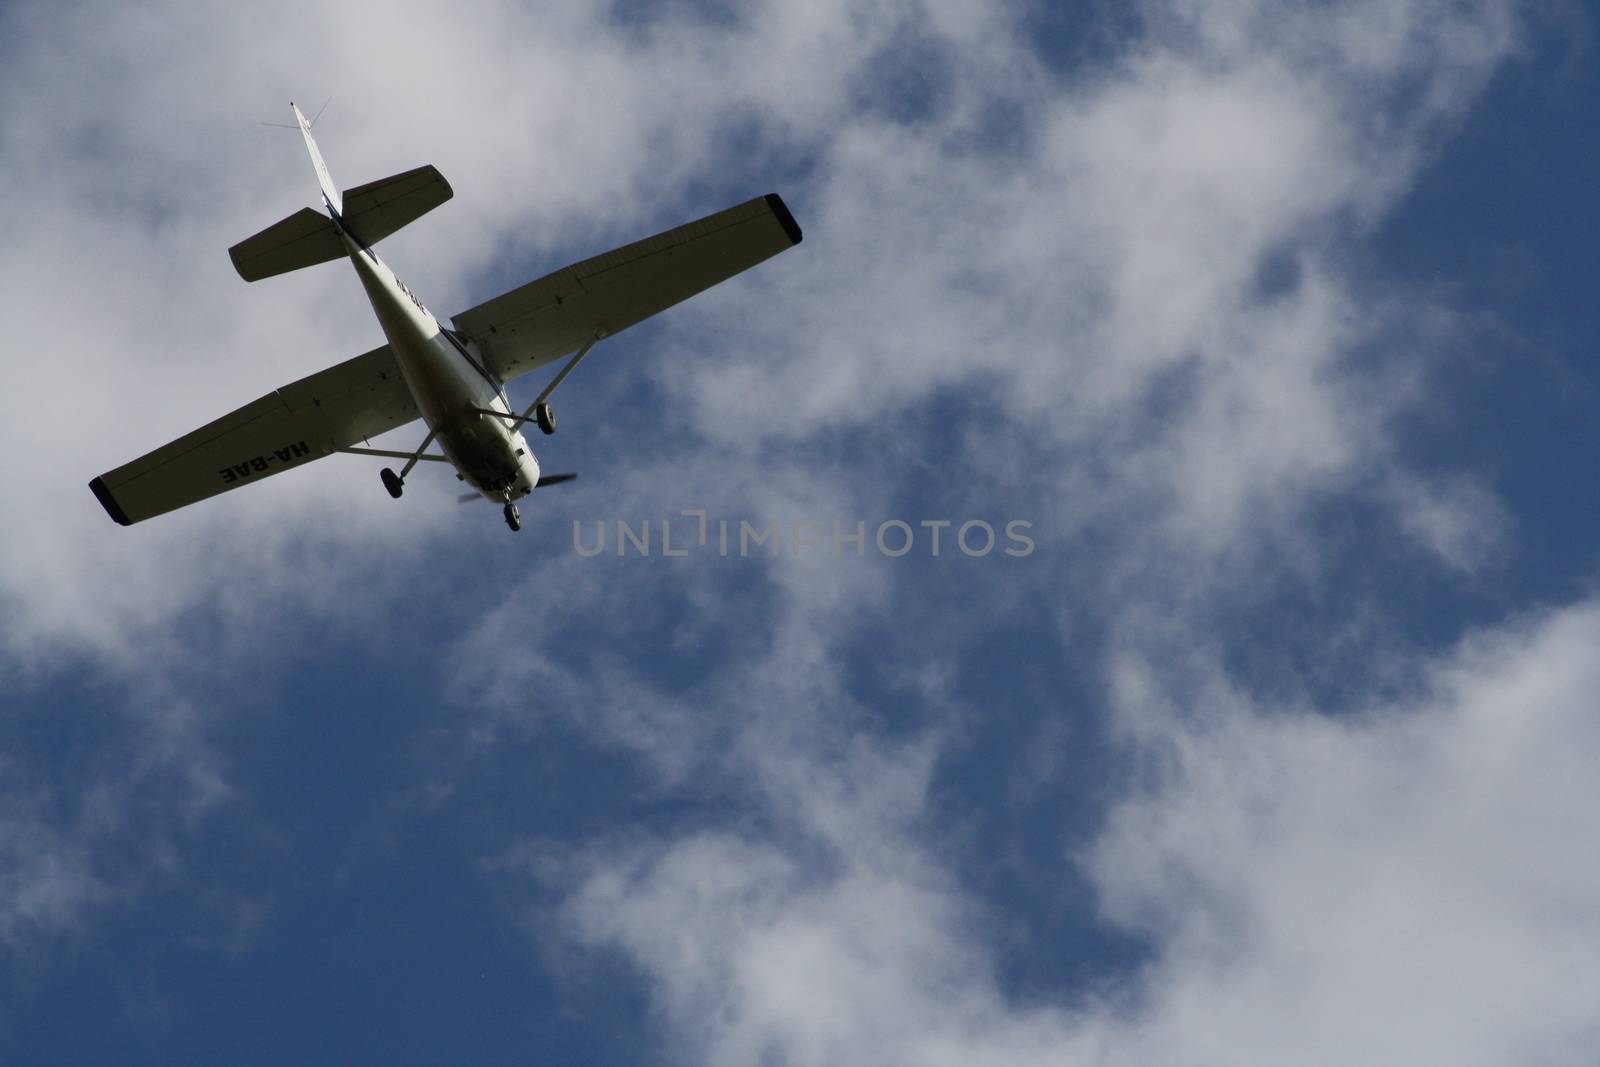 A plane flying through a cloudy blue sky. High quality photo